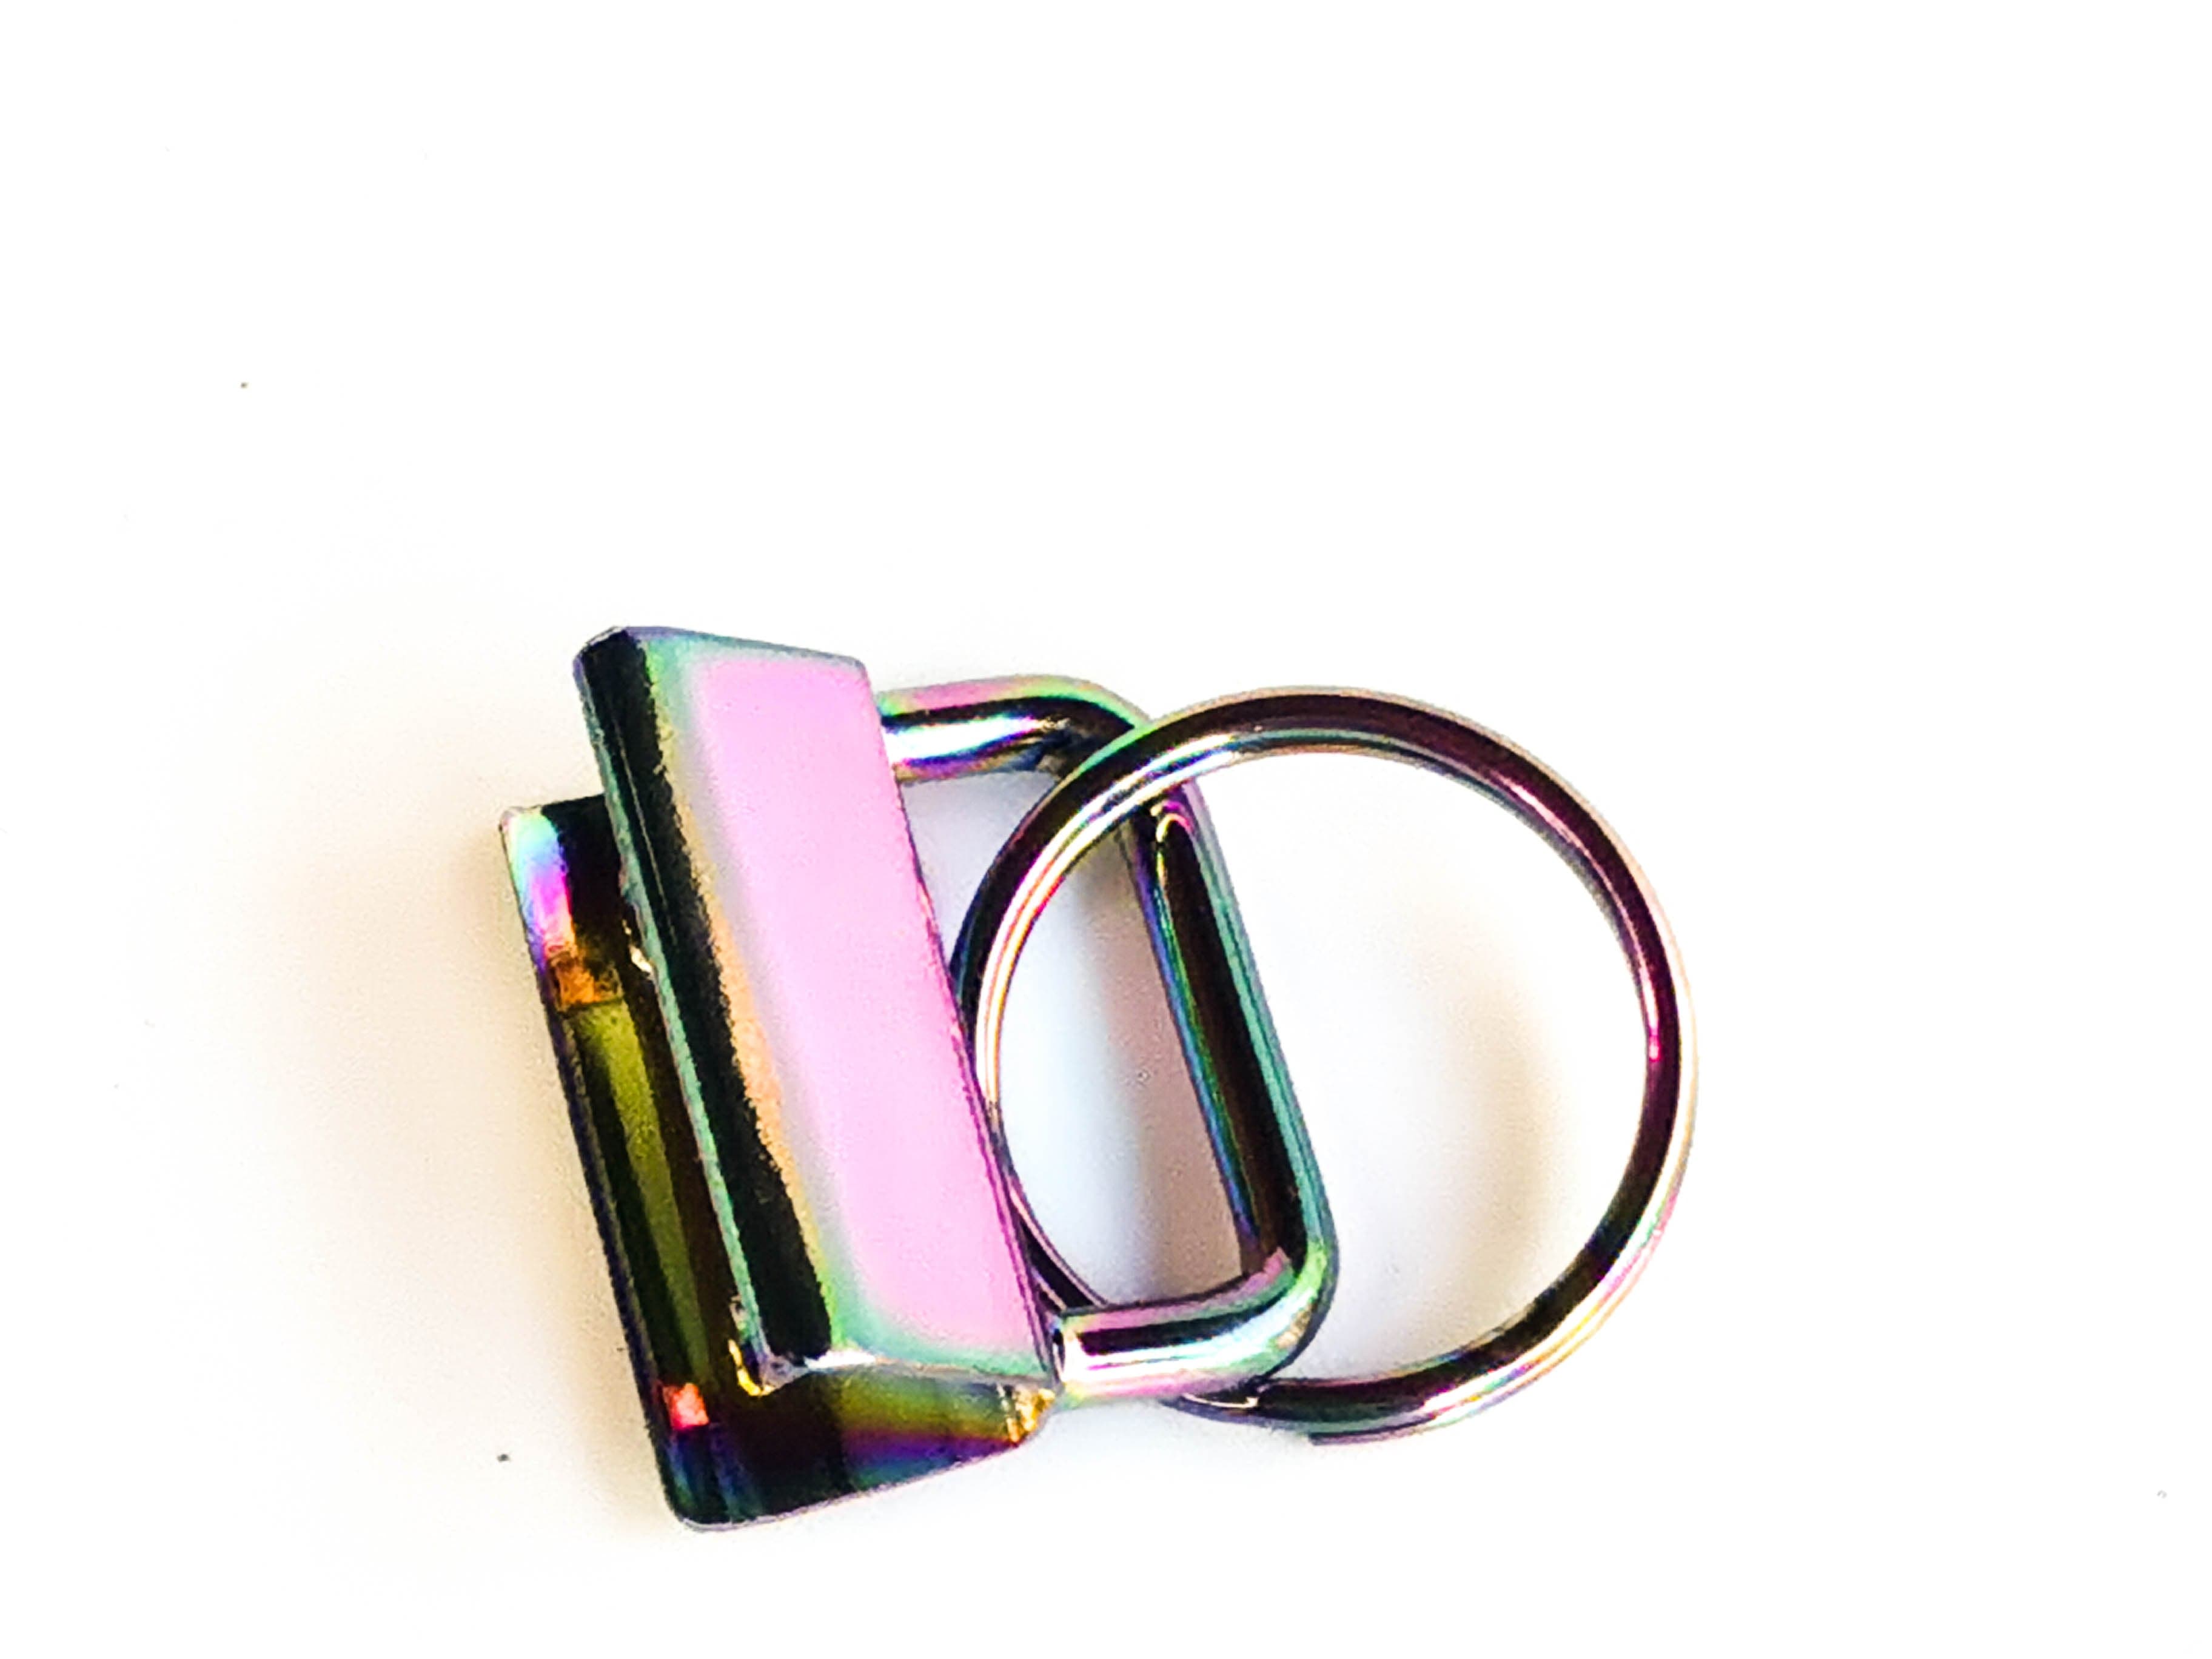 Kiwi Bagineers Iridescent Rainbow Key Chain Key Fob Hardware By Kiwi Bagineers. Pack of 3